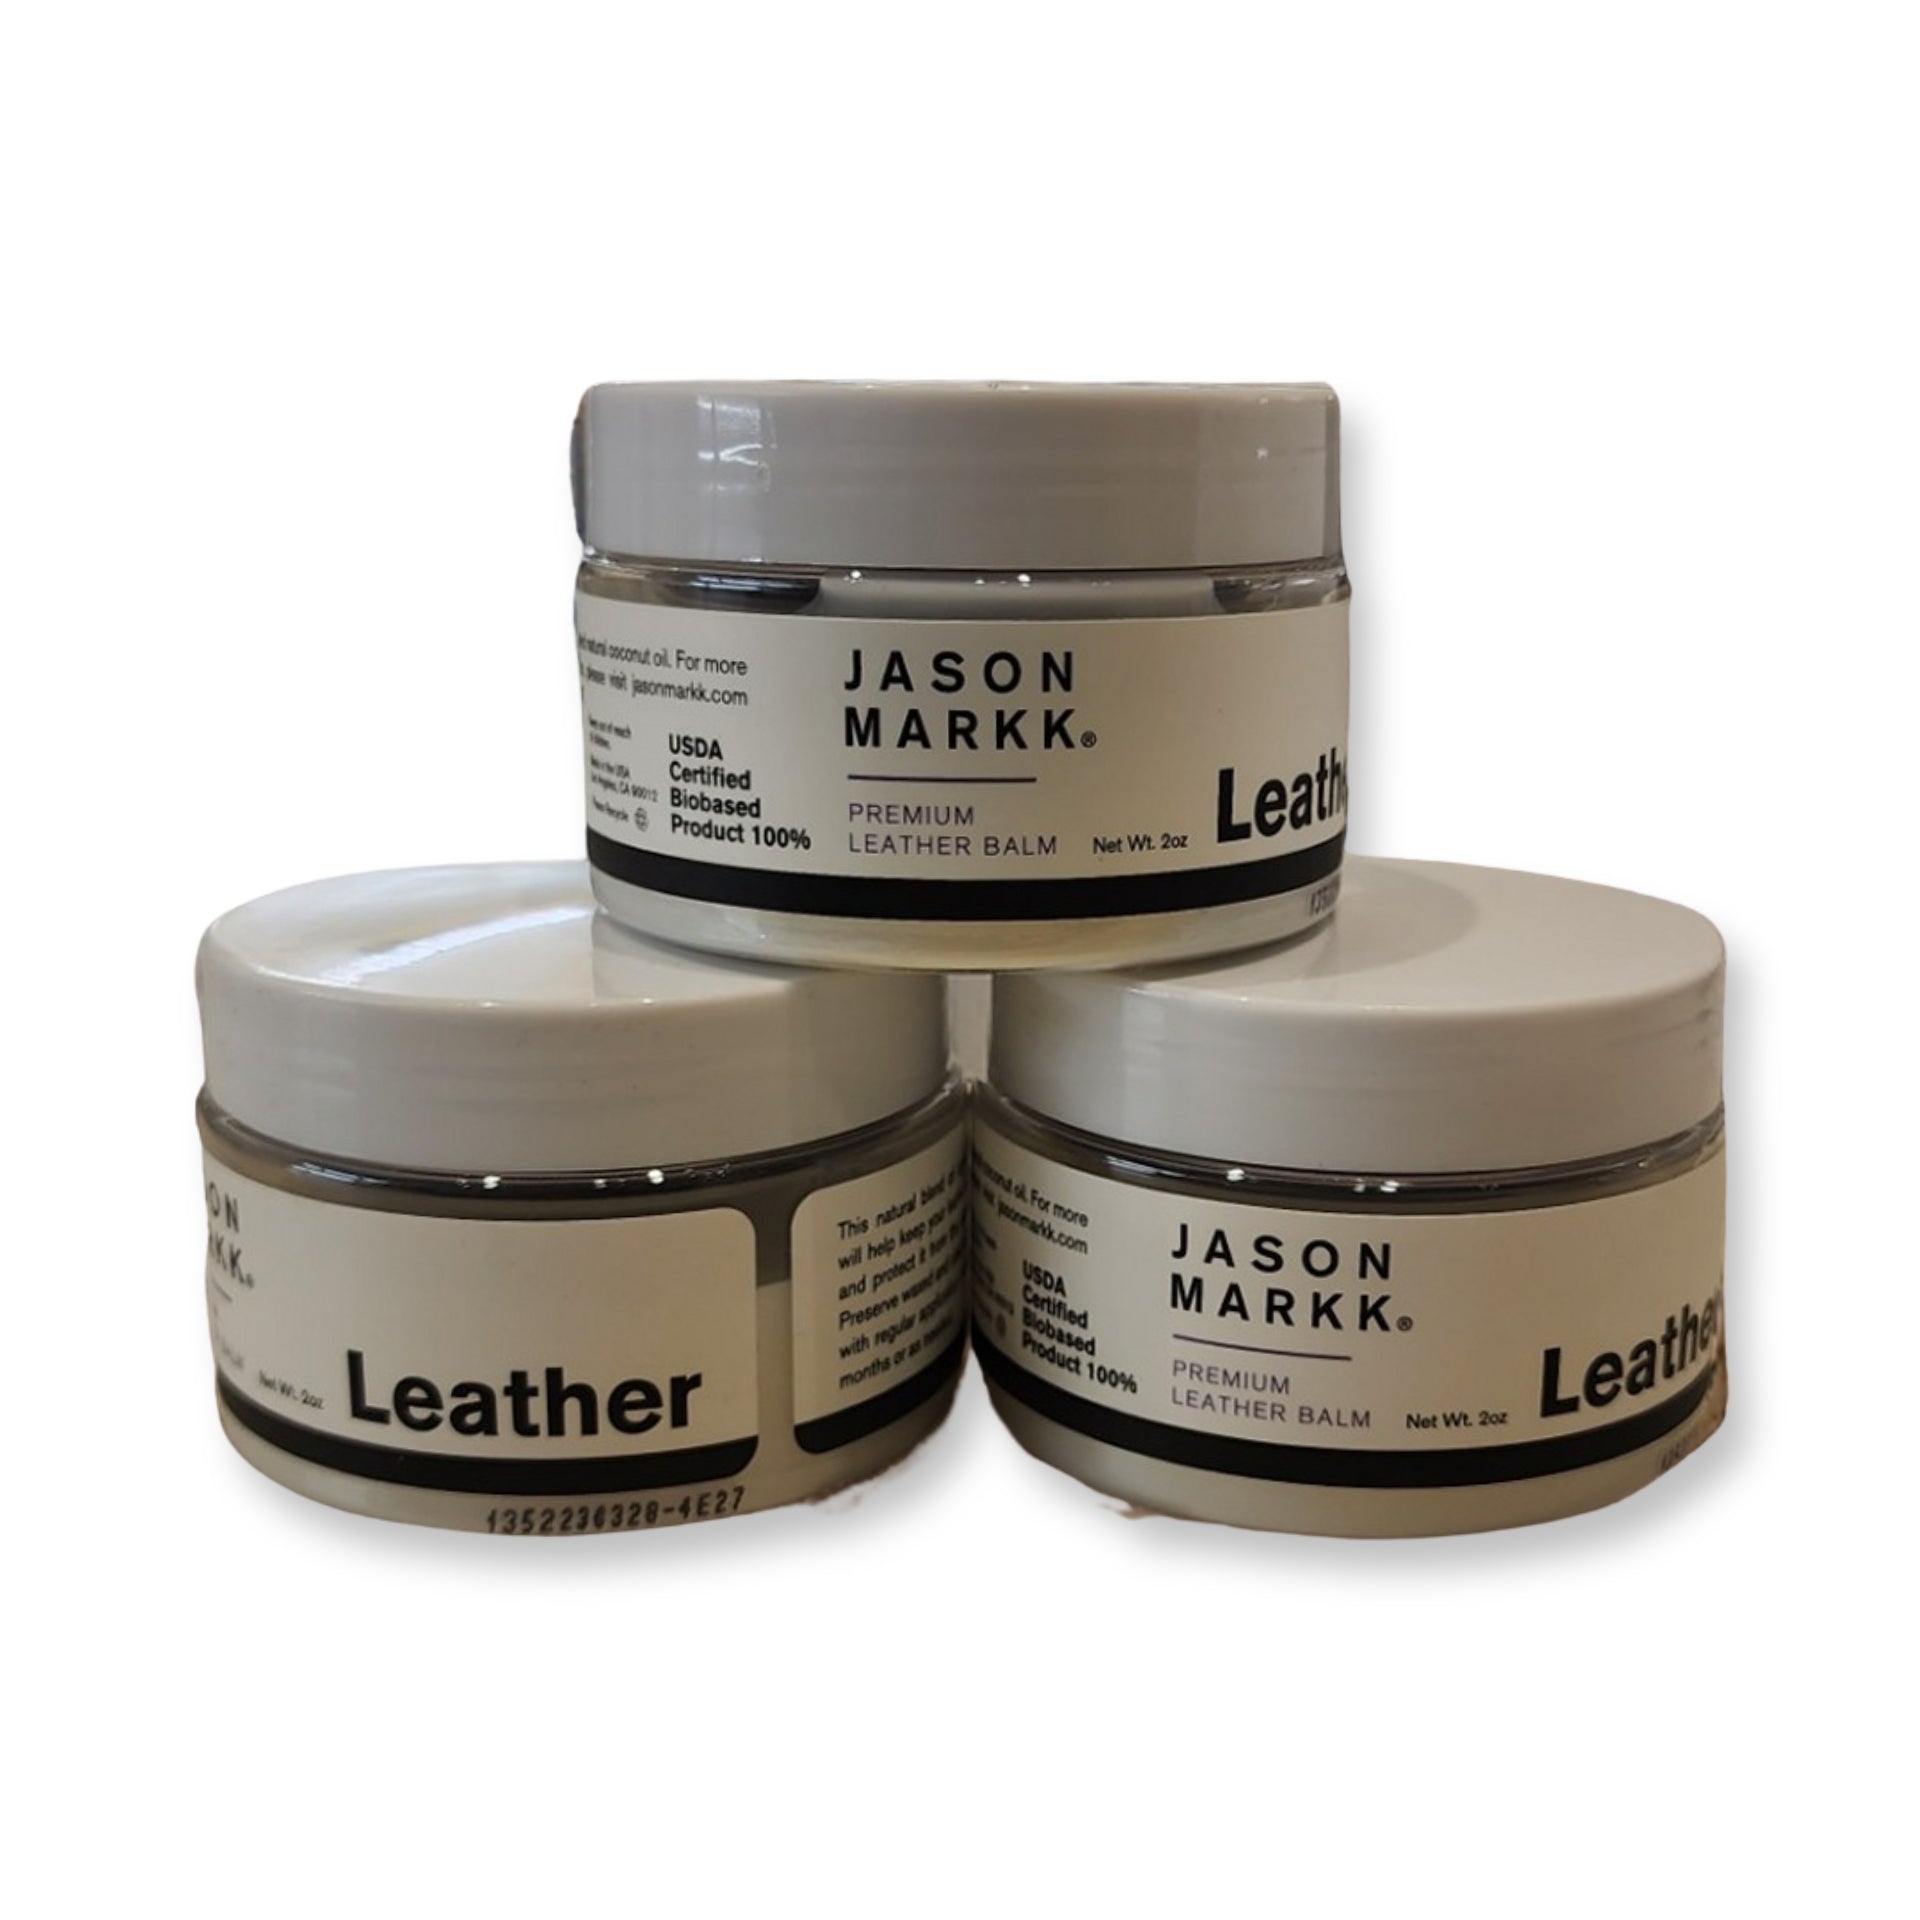 Jason Markk Premium Leather Balm